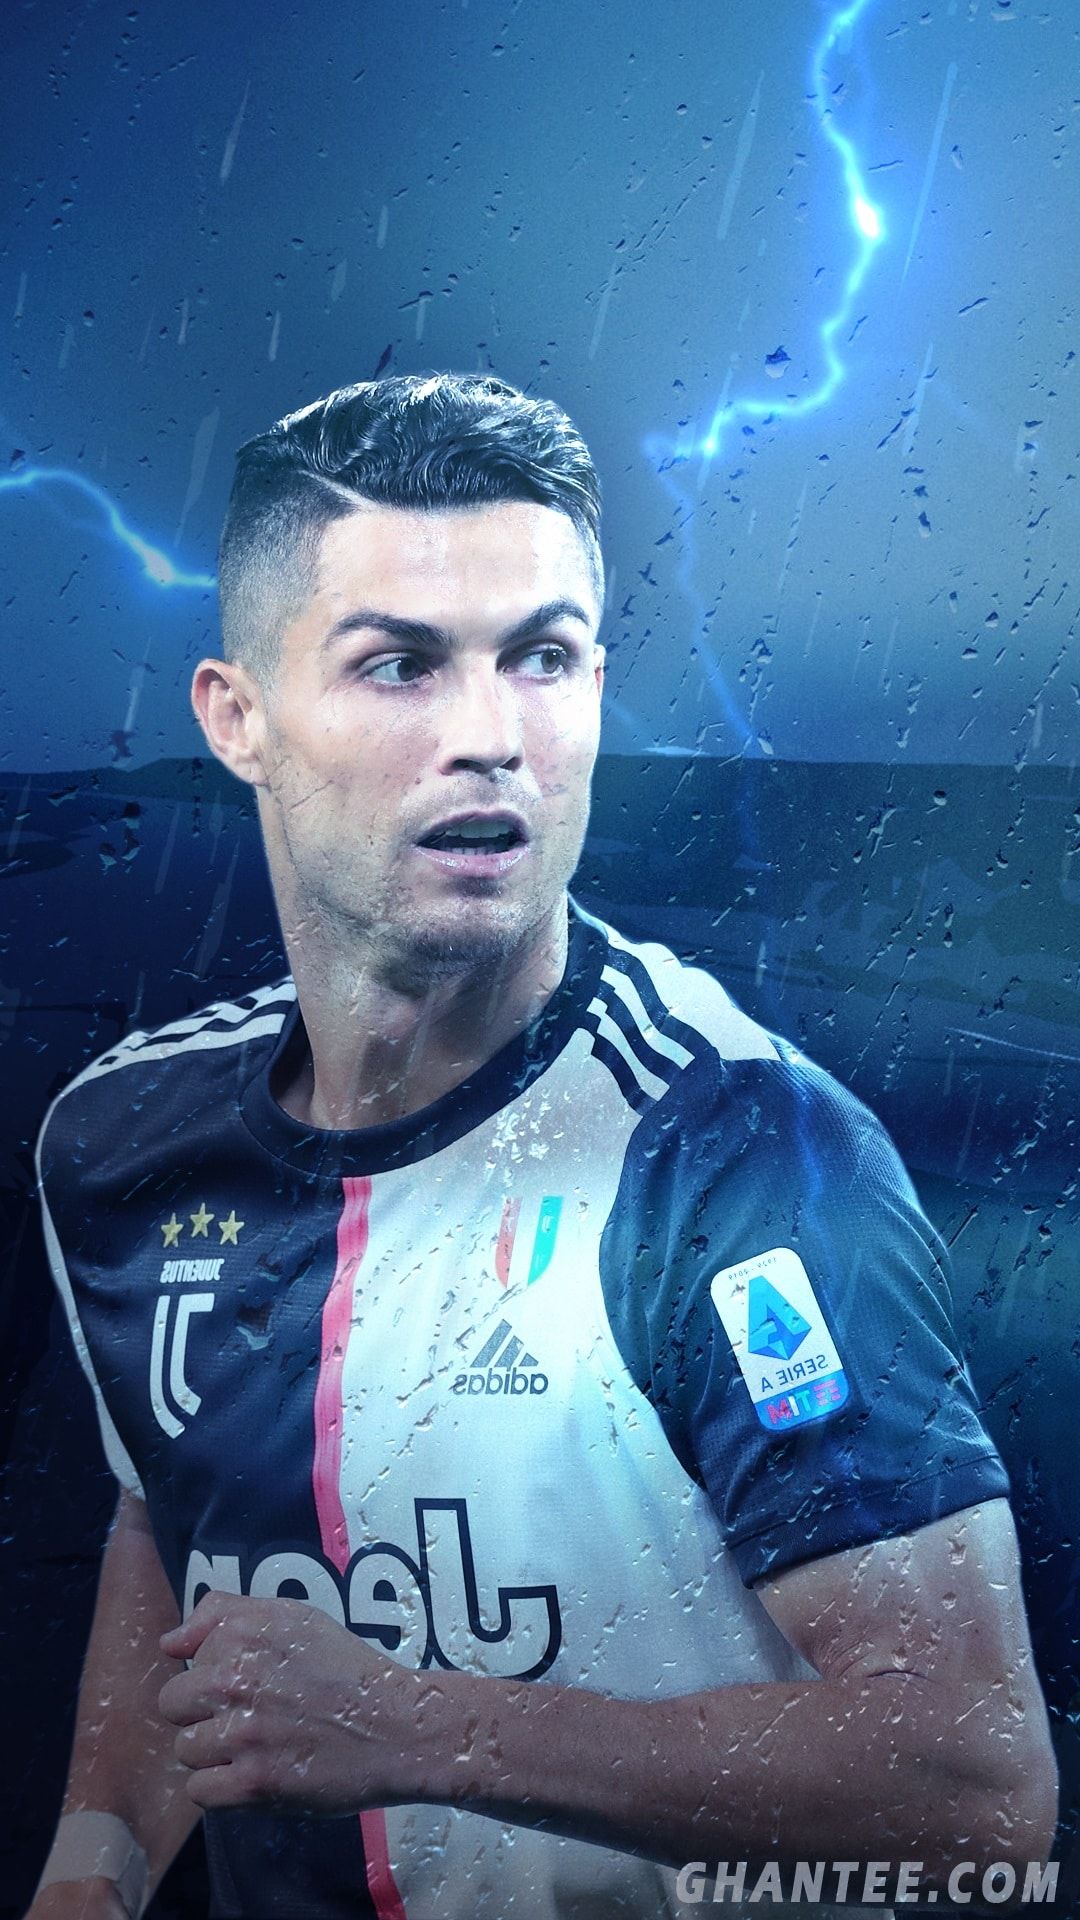 Goat Cristiano Ronaldo 2021 Wallpapers On Ewallpapers